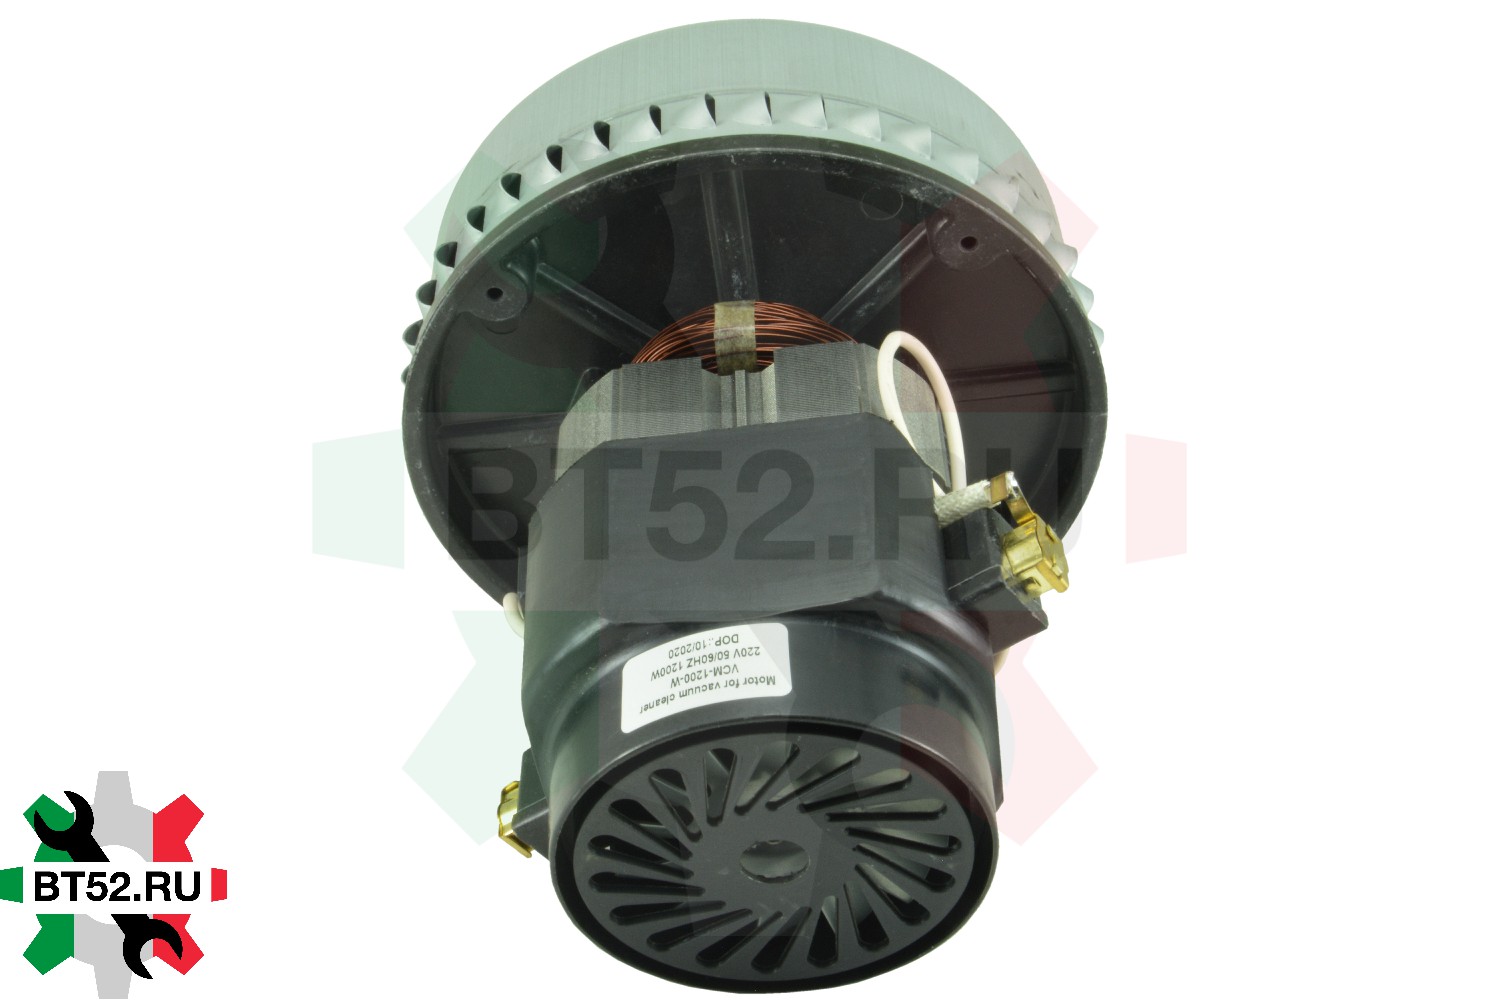 Двигатель пылесоса YDC-09 ,1200w (моющий),H170